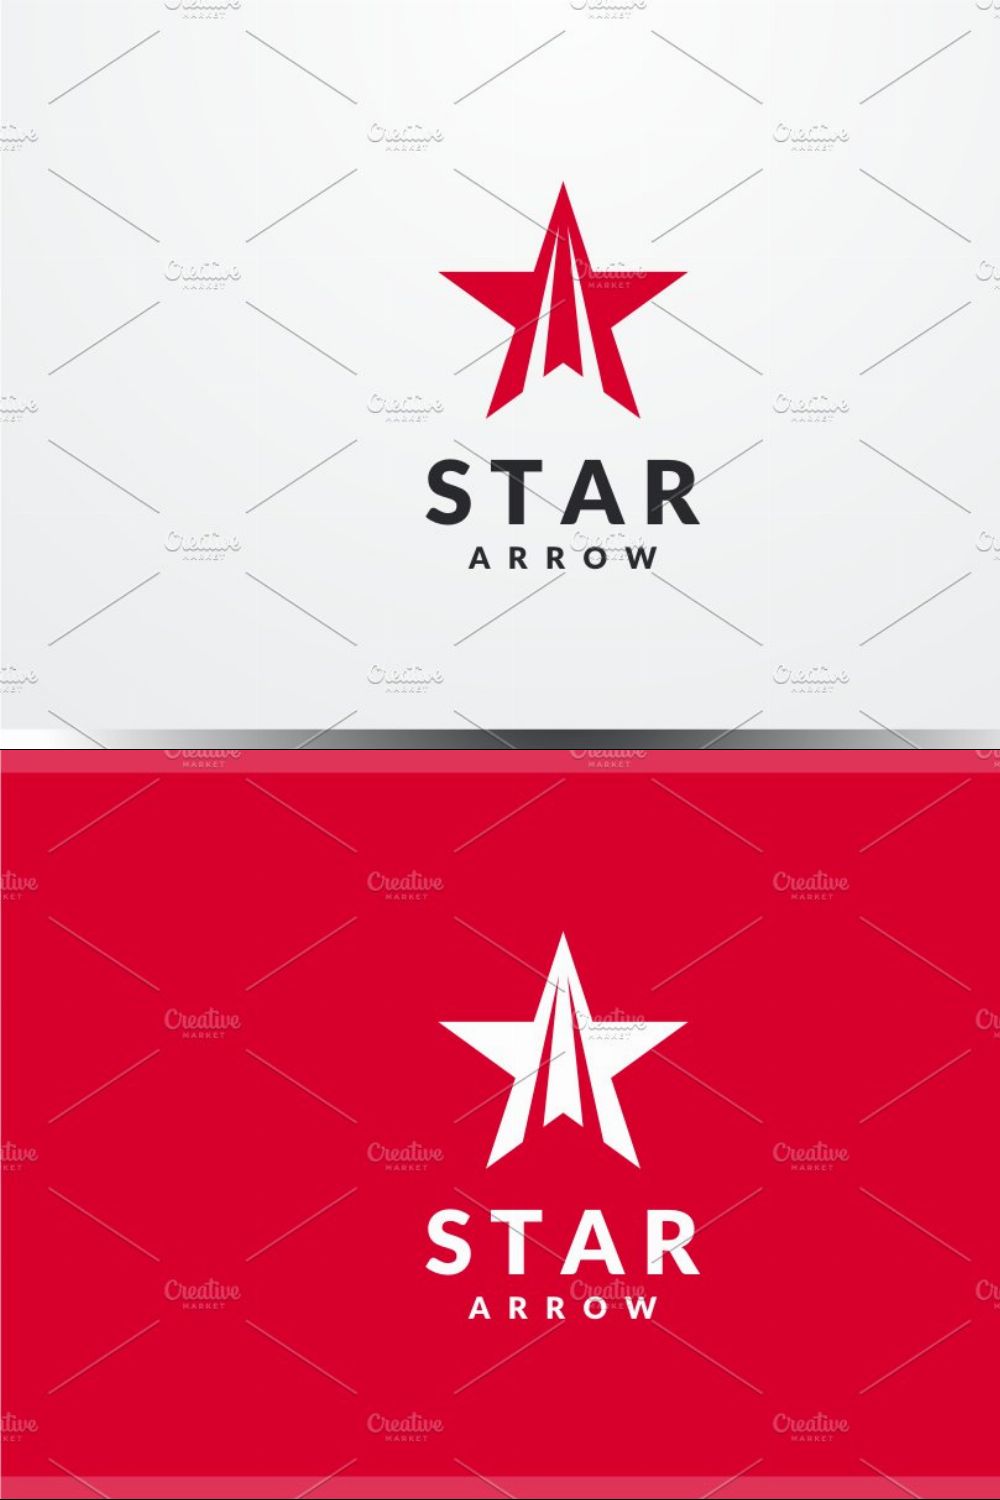 Star Arrow Logo pinterest preview image.